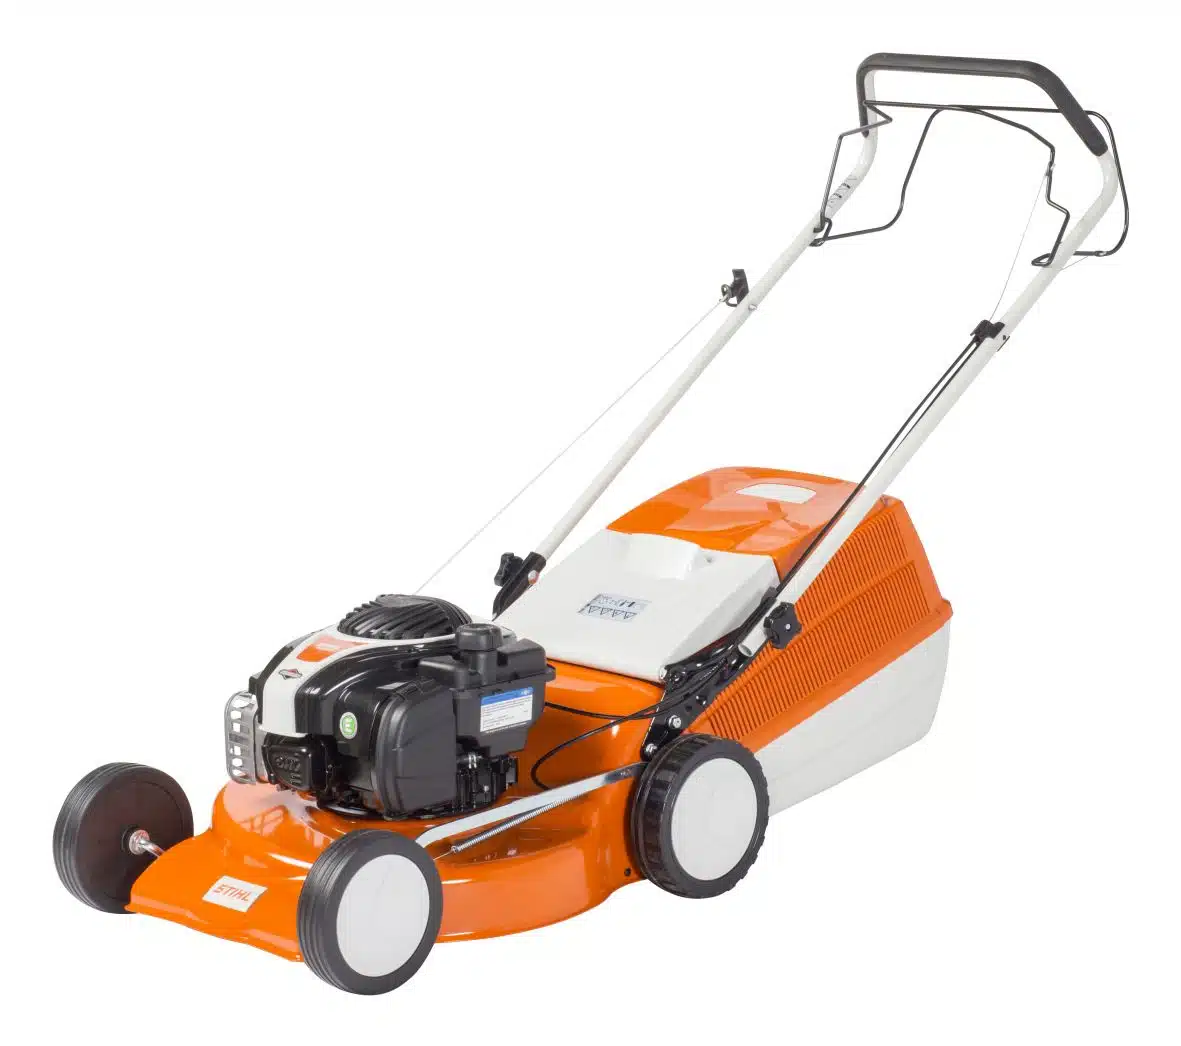 MA:Stihl
MO:RM 248 T
CA:Lawnmowers
CO:White  Orange
TC:IC15165-0357-00